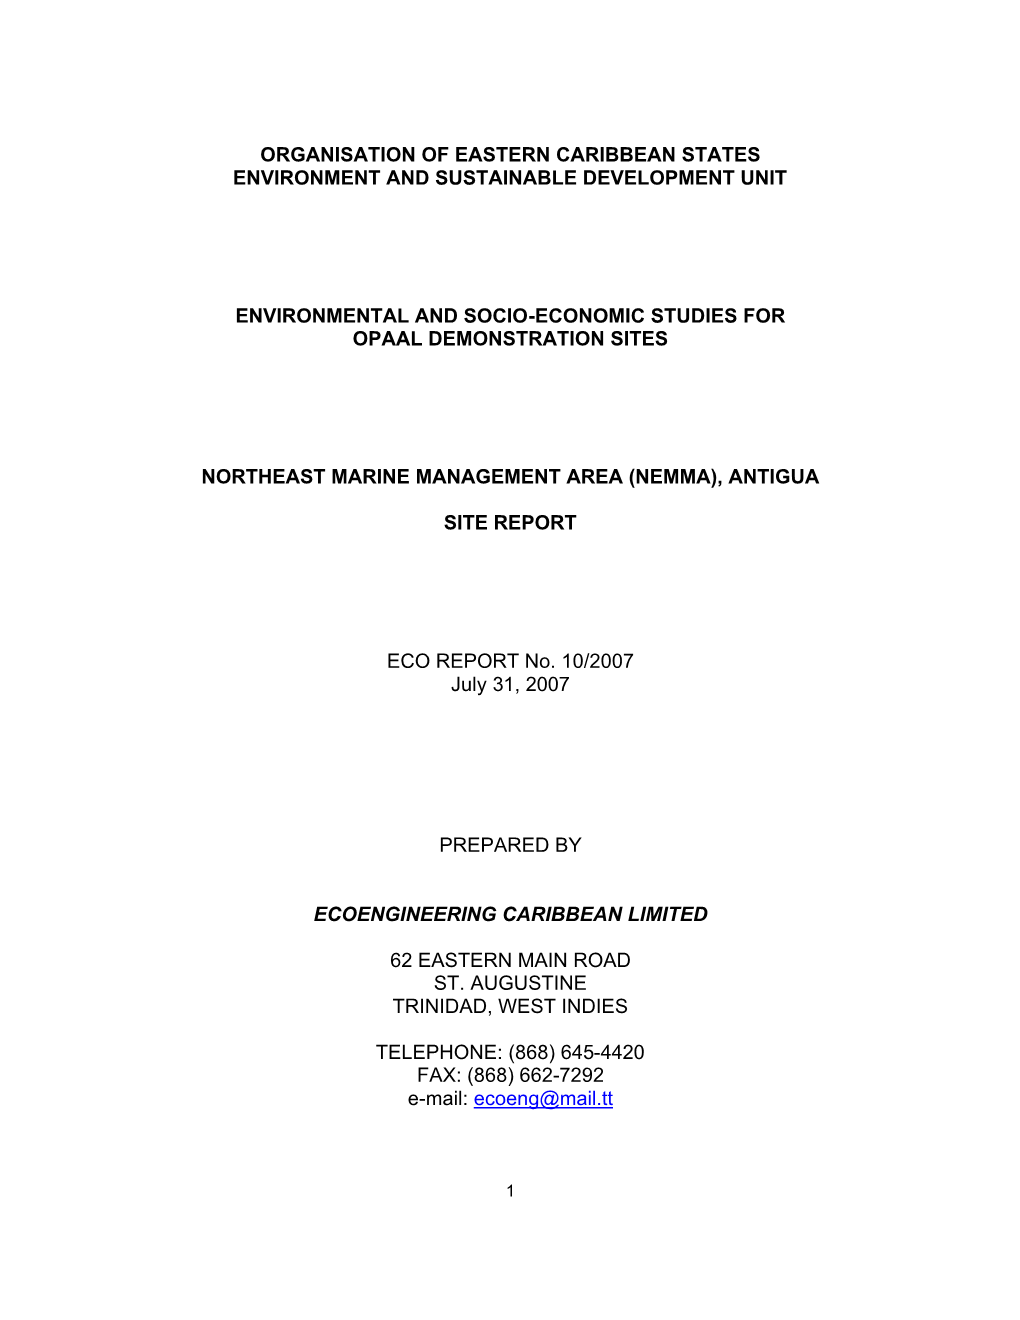 North-East Marine Management Area